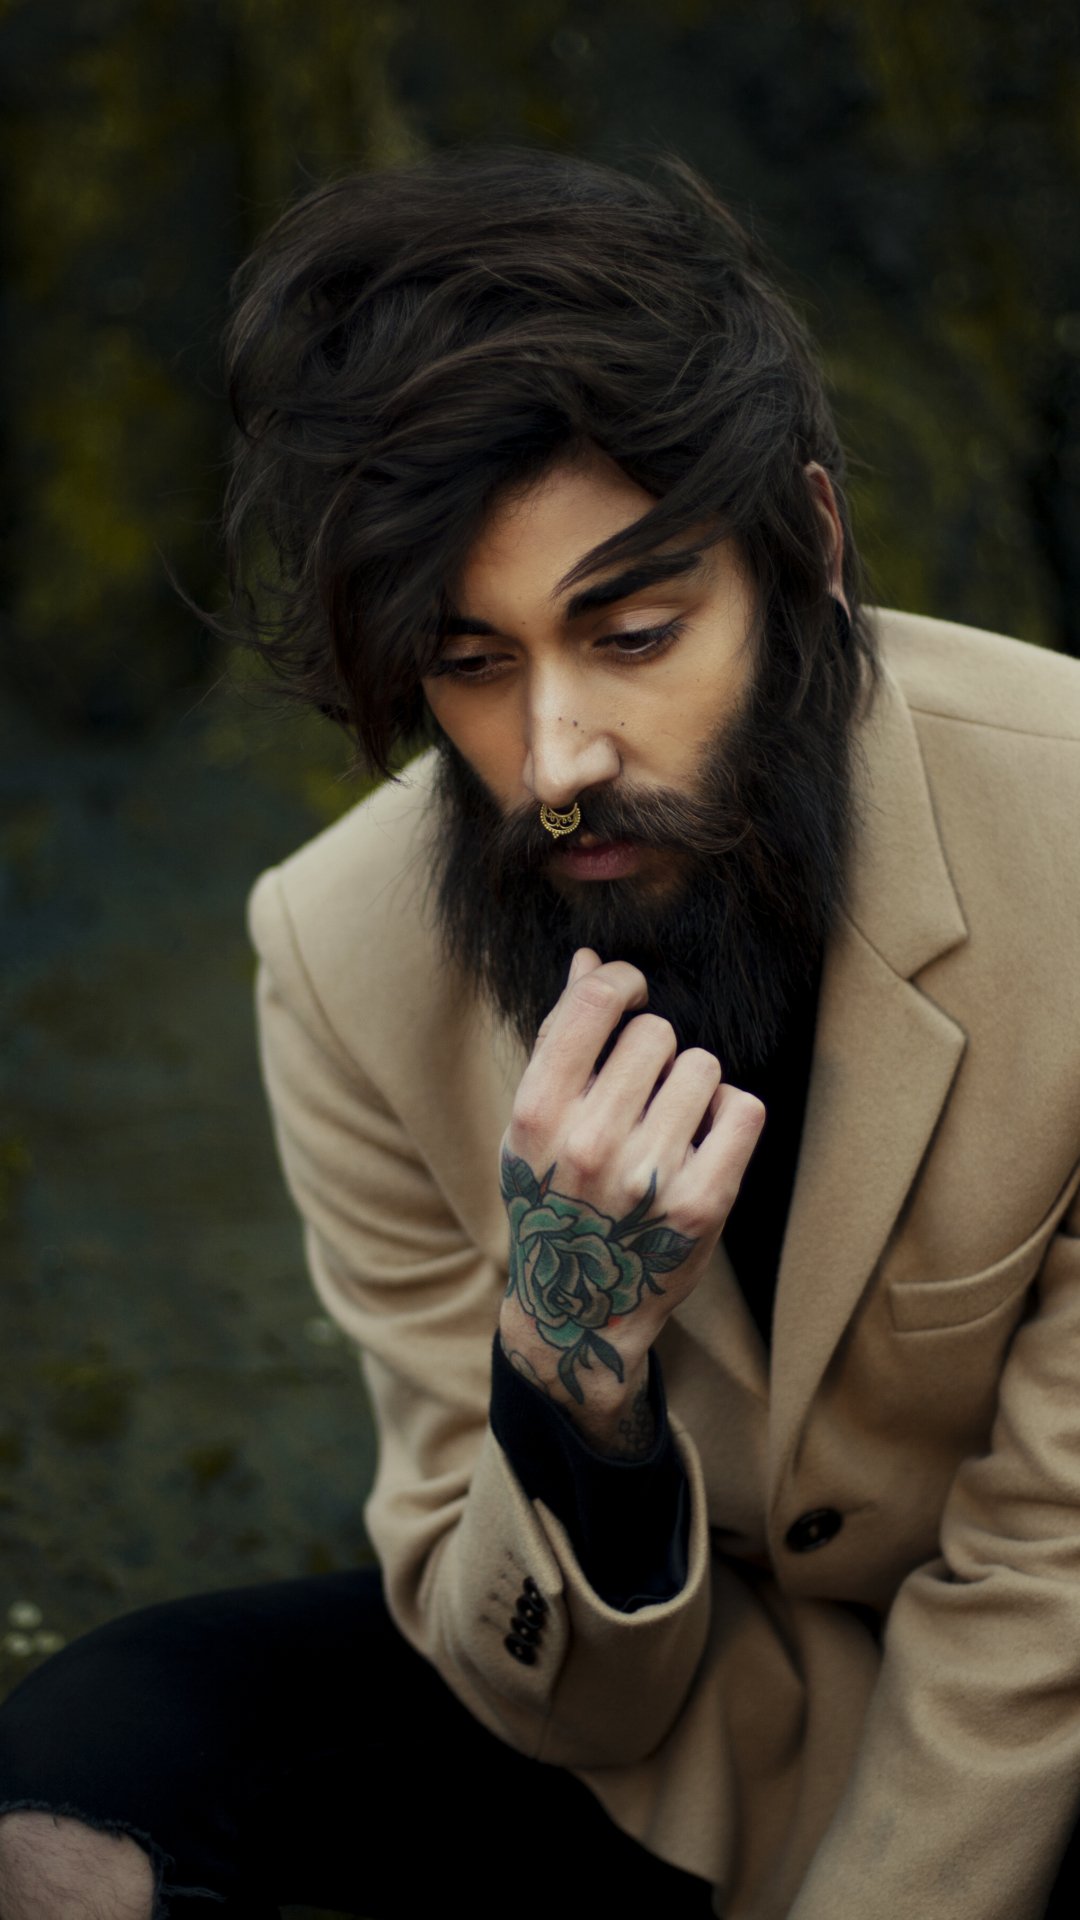 Beard Man With Tattoo In Hand